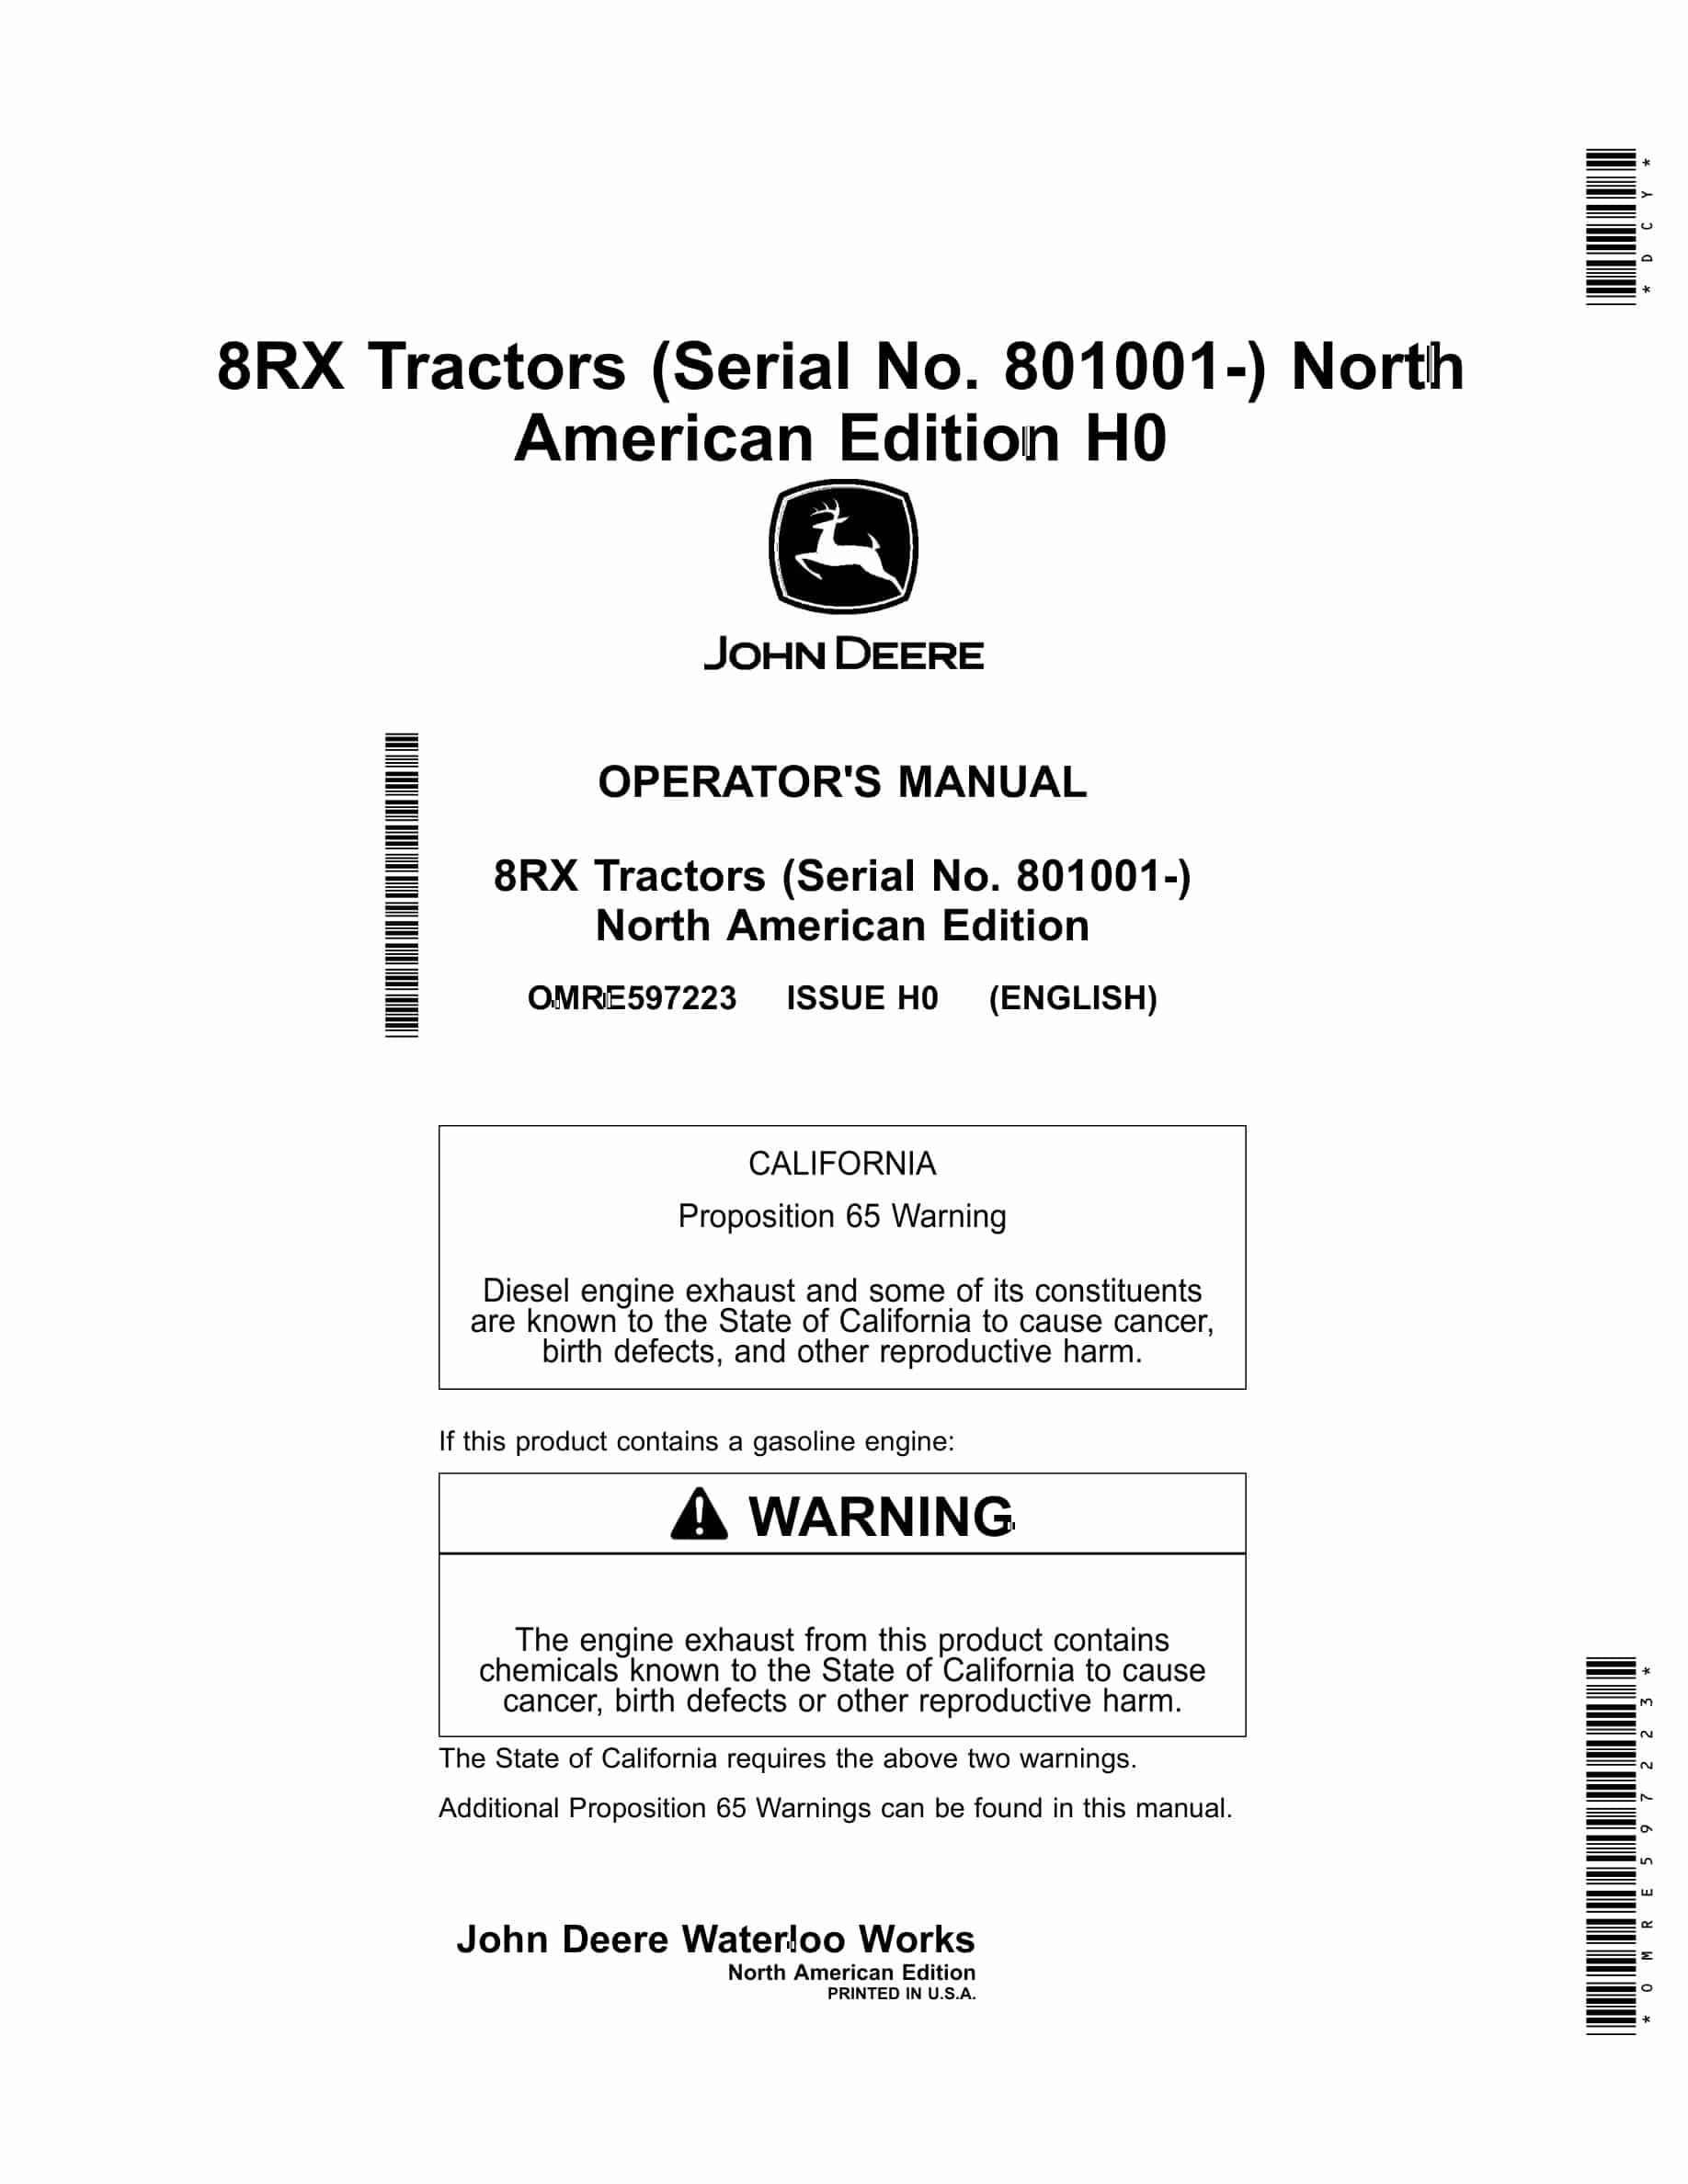 John Deere 8RX Tractor Operator Manual OMRE597223-1